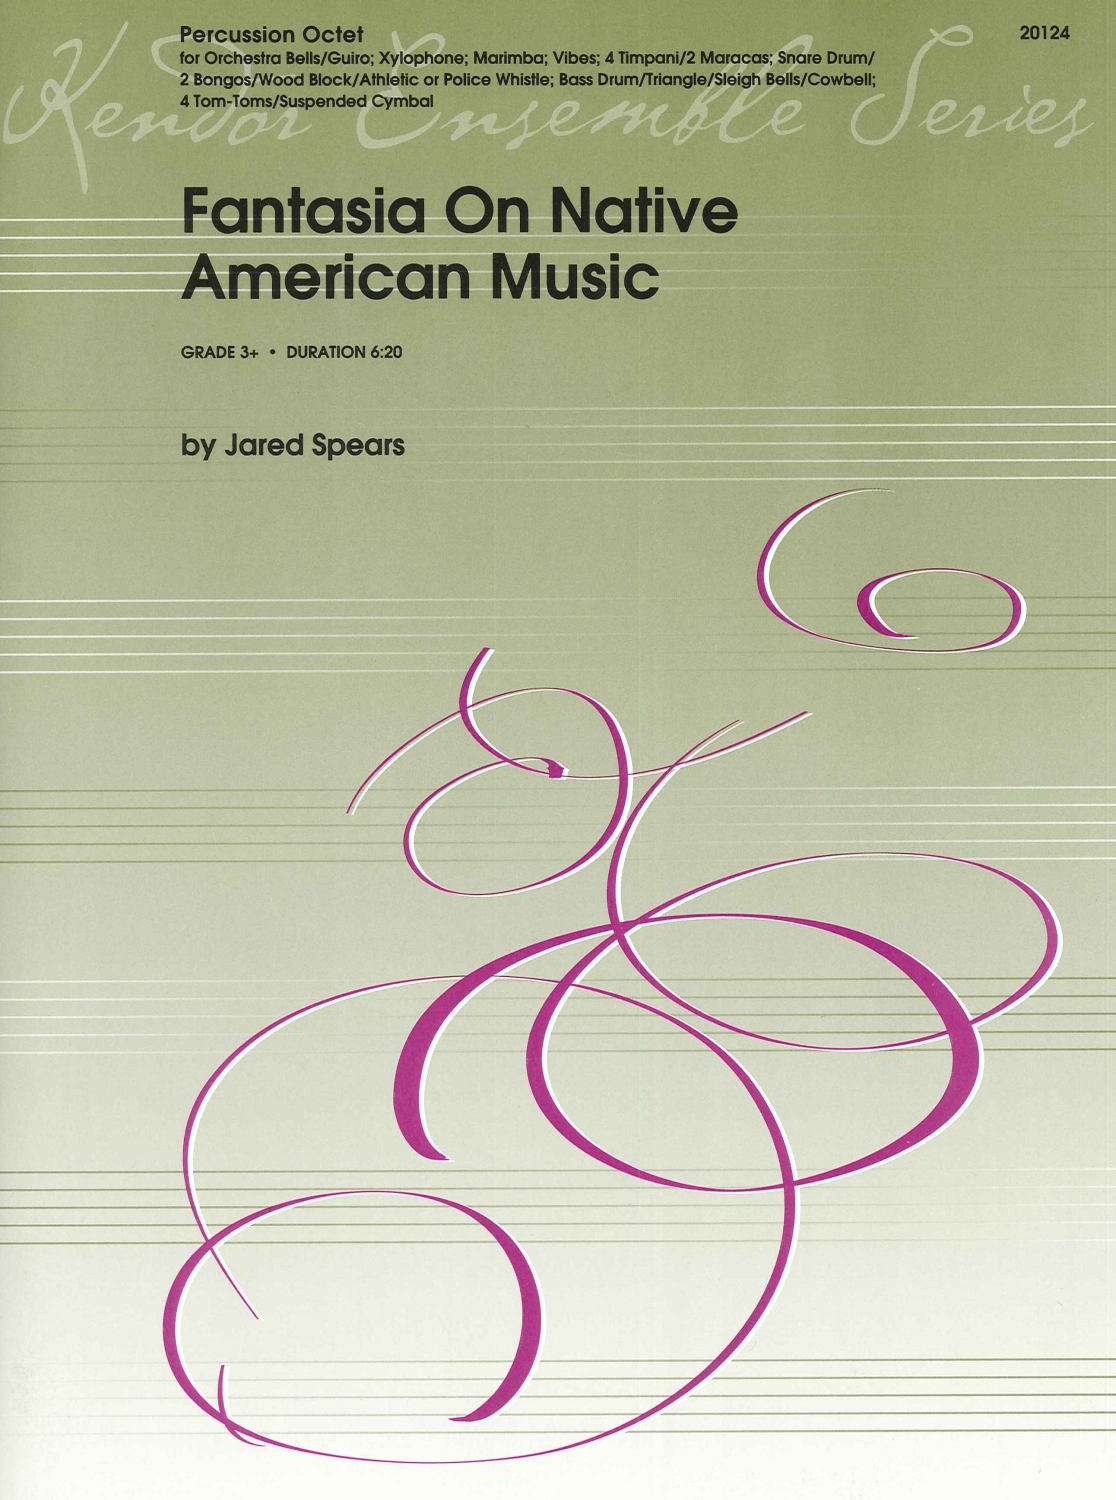 jared-spears-fantasia-on-native-american-music-per_0001.JPG